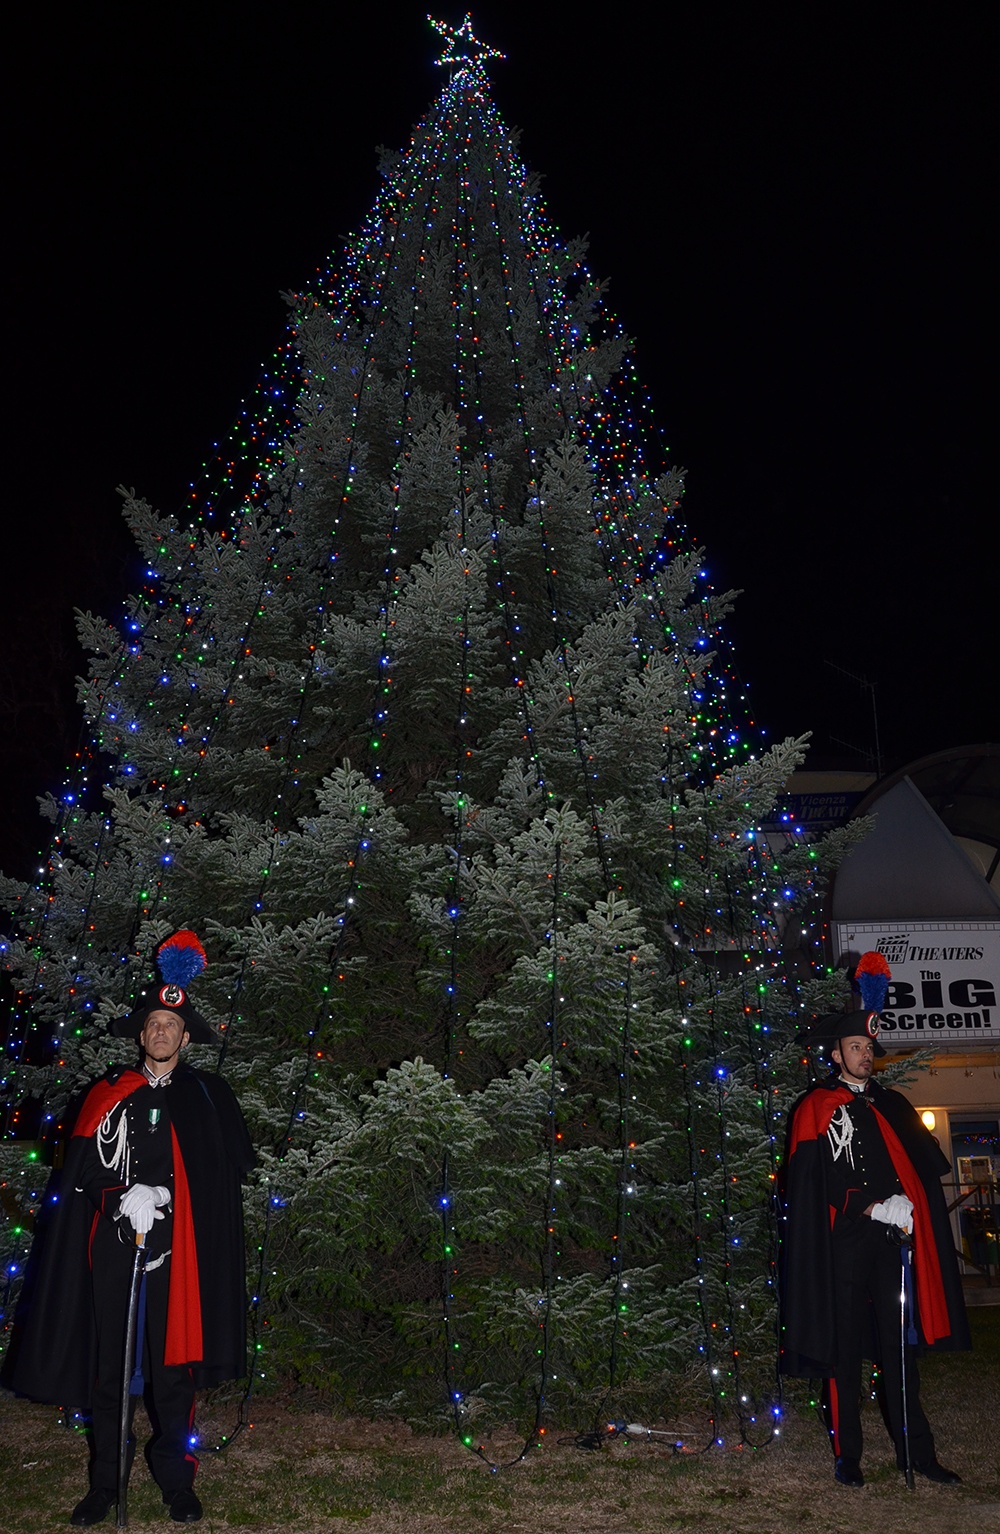 Vicenza Military Community Tree-lighting ceremony